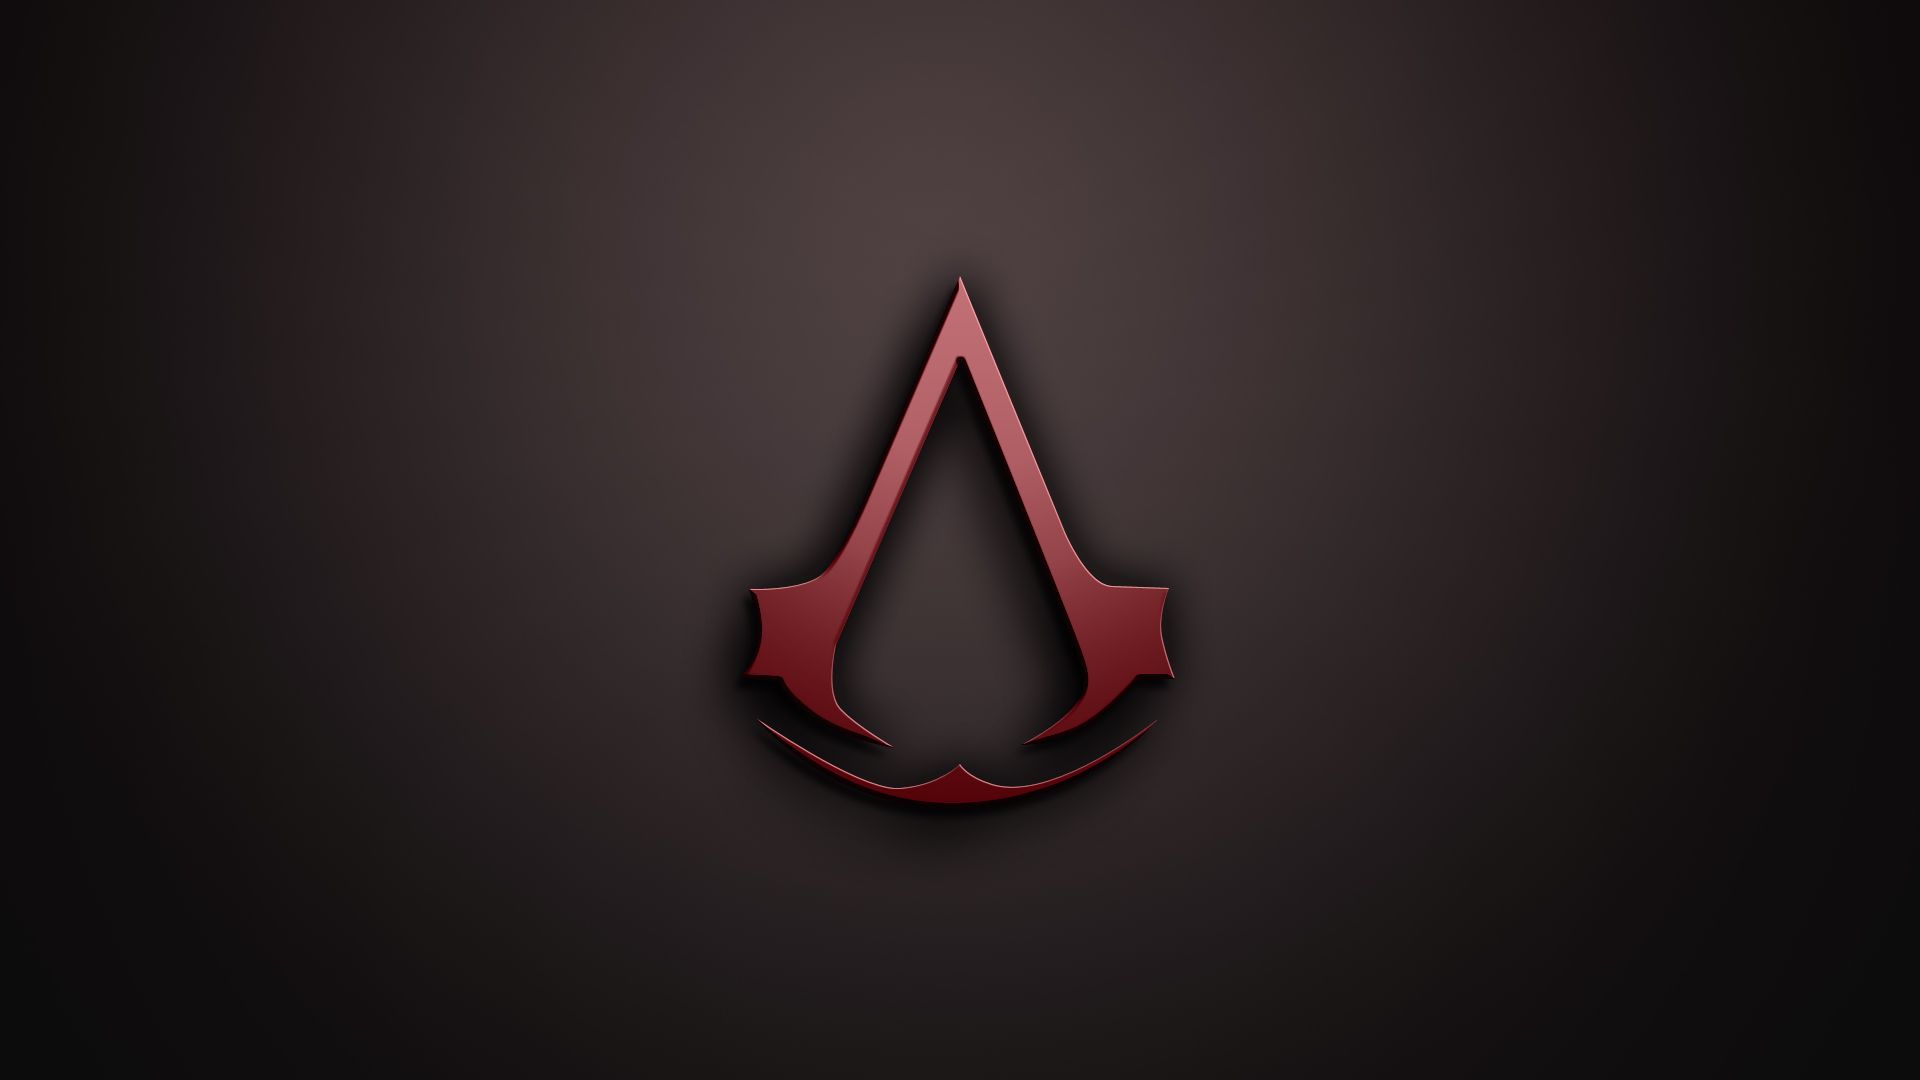 Assassin's Creed Valhalla Domain Registered